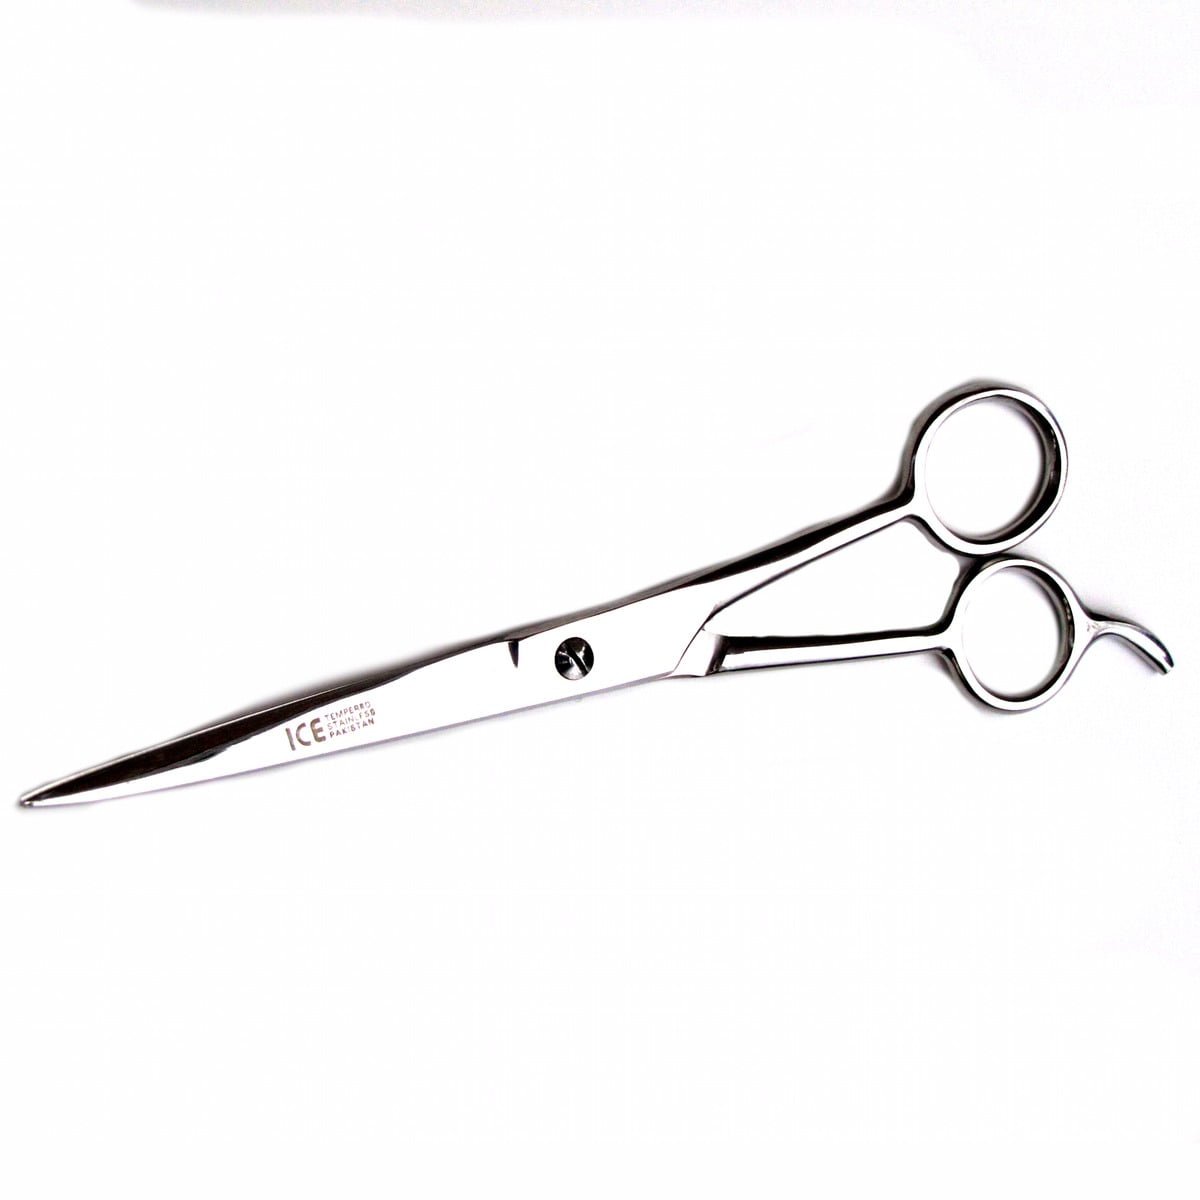 shear scissors